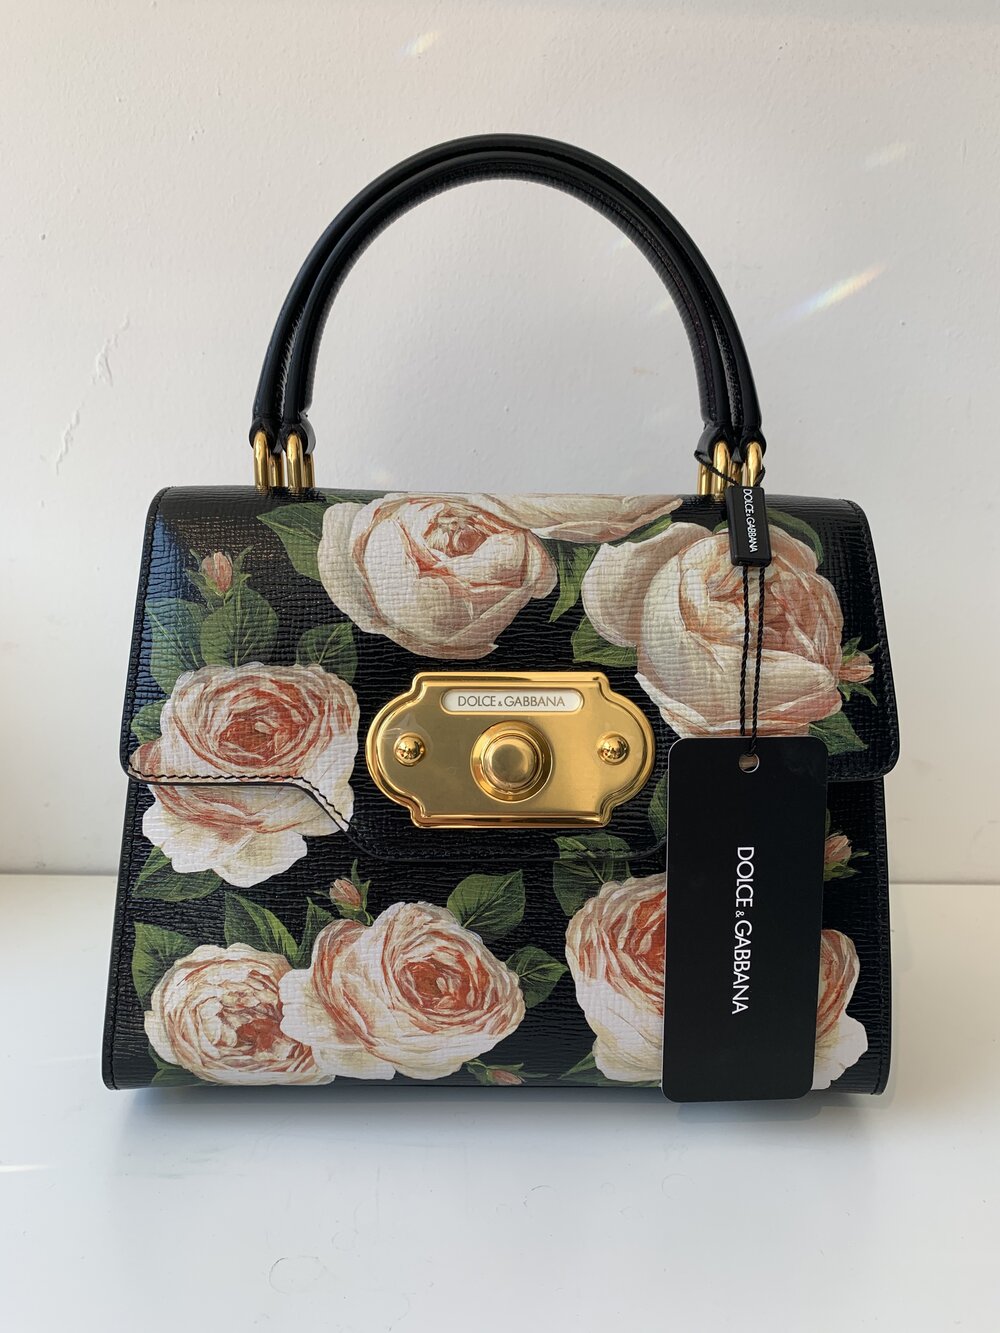 Dolce and Gabbana Welcome Floral Shoulder Bag